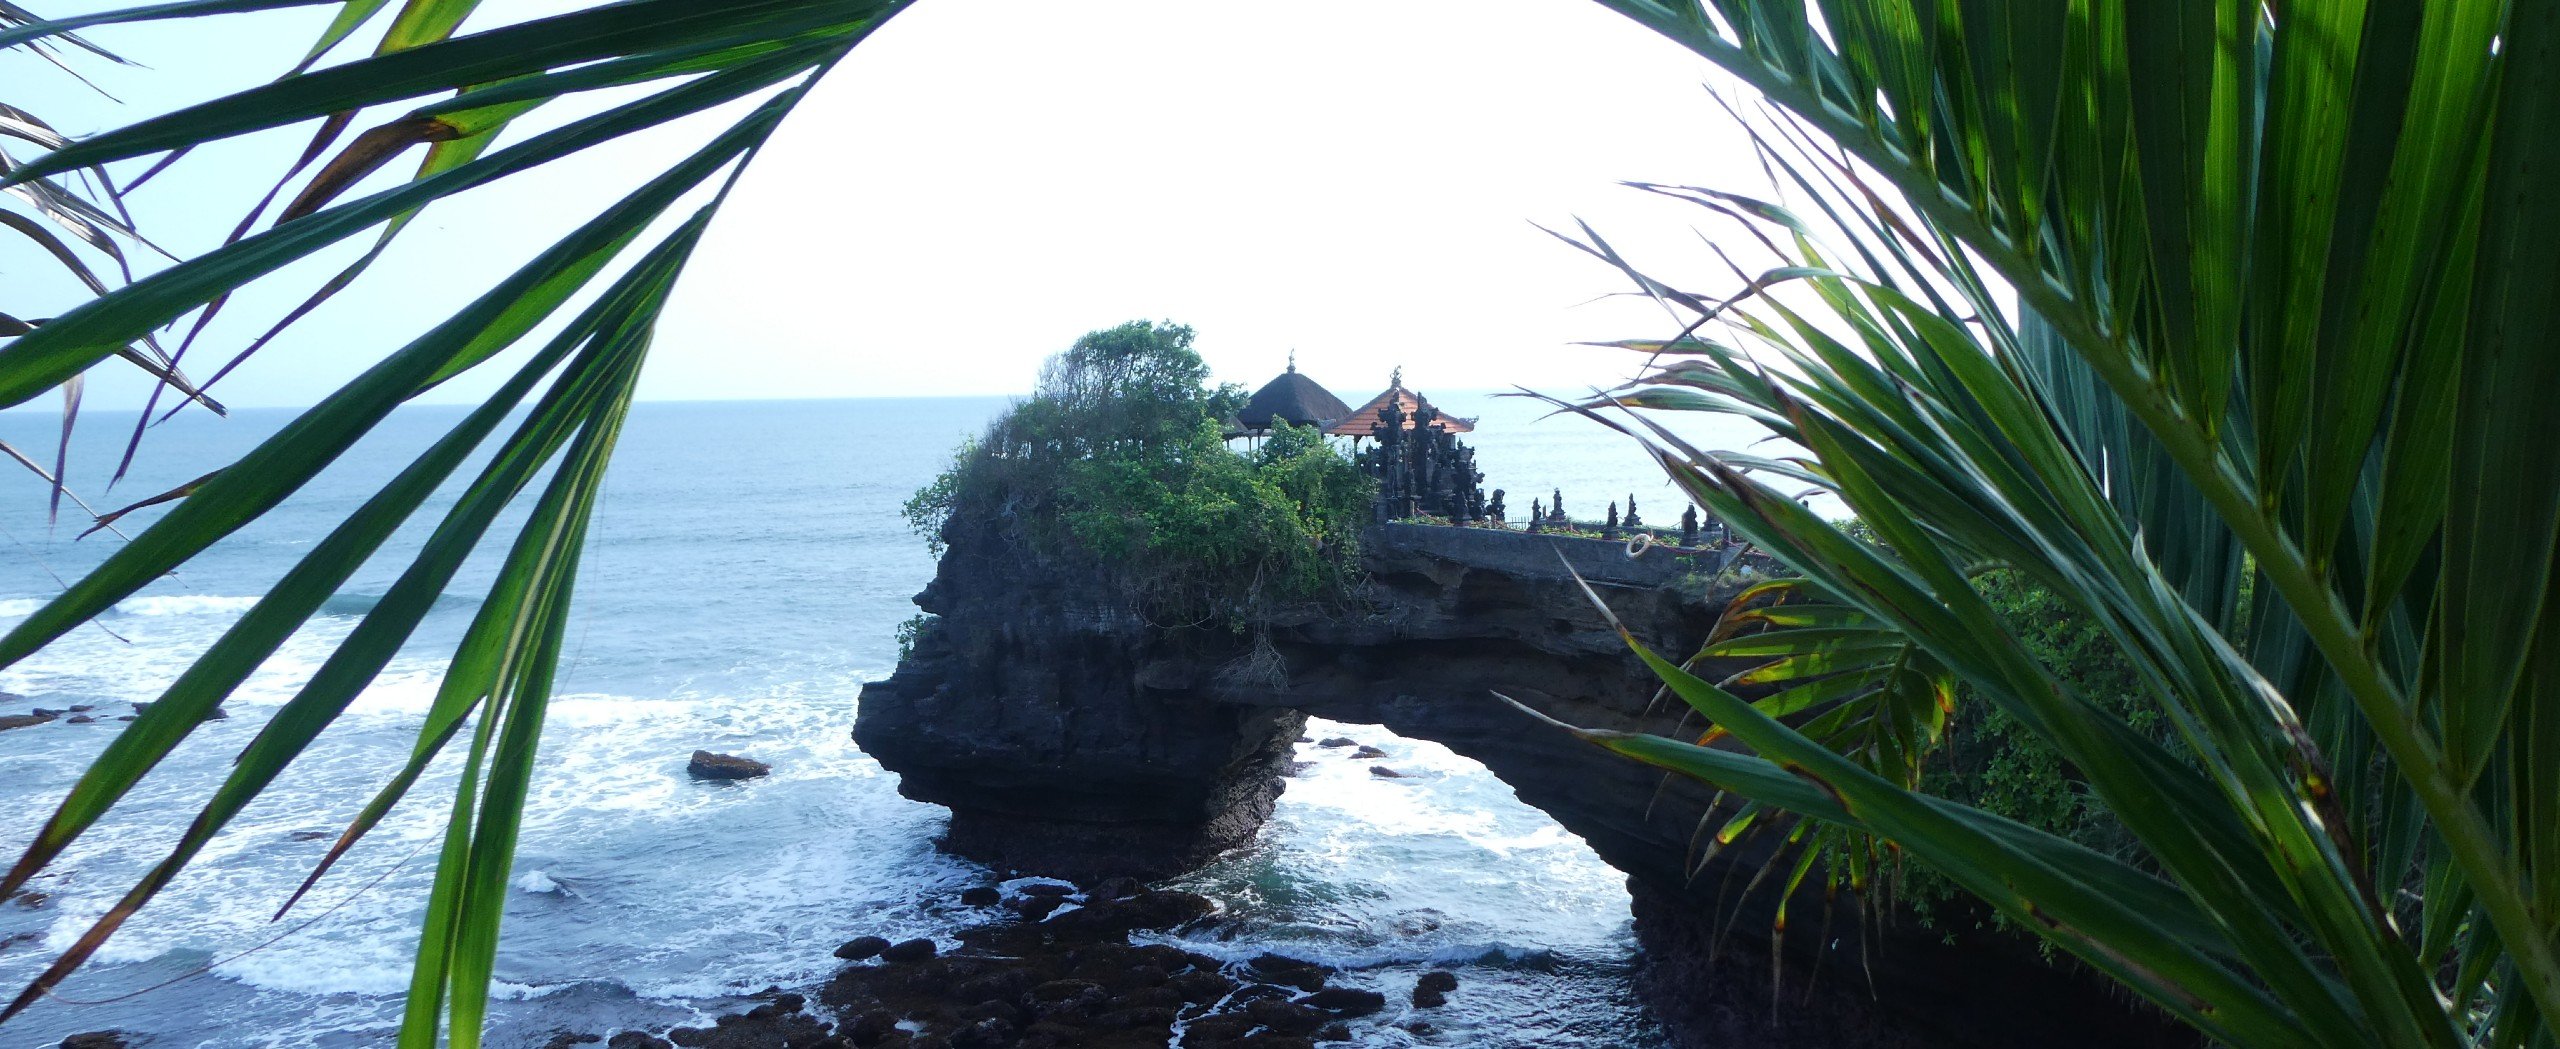 Bali and Komodo Islands Tour